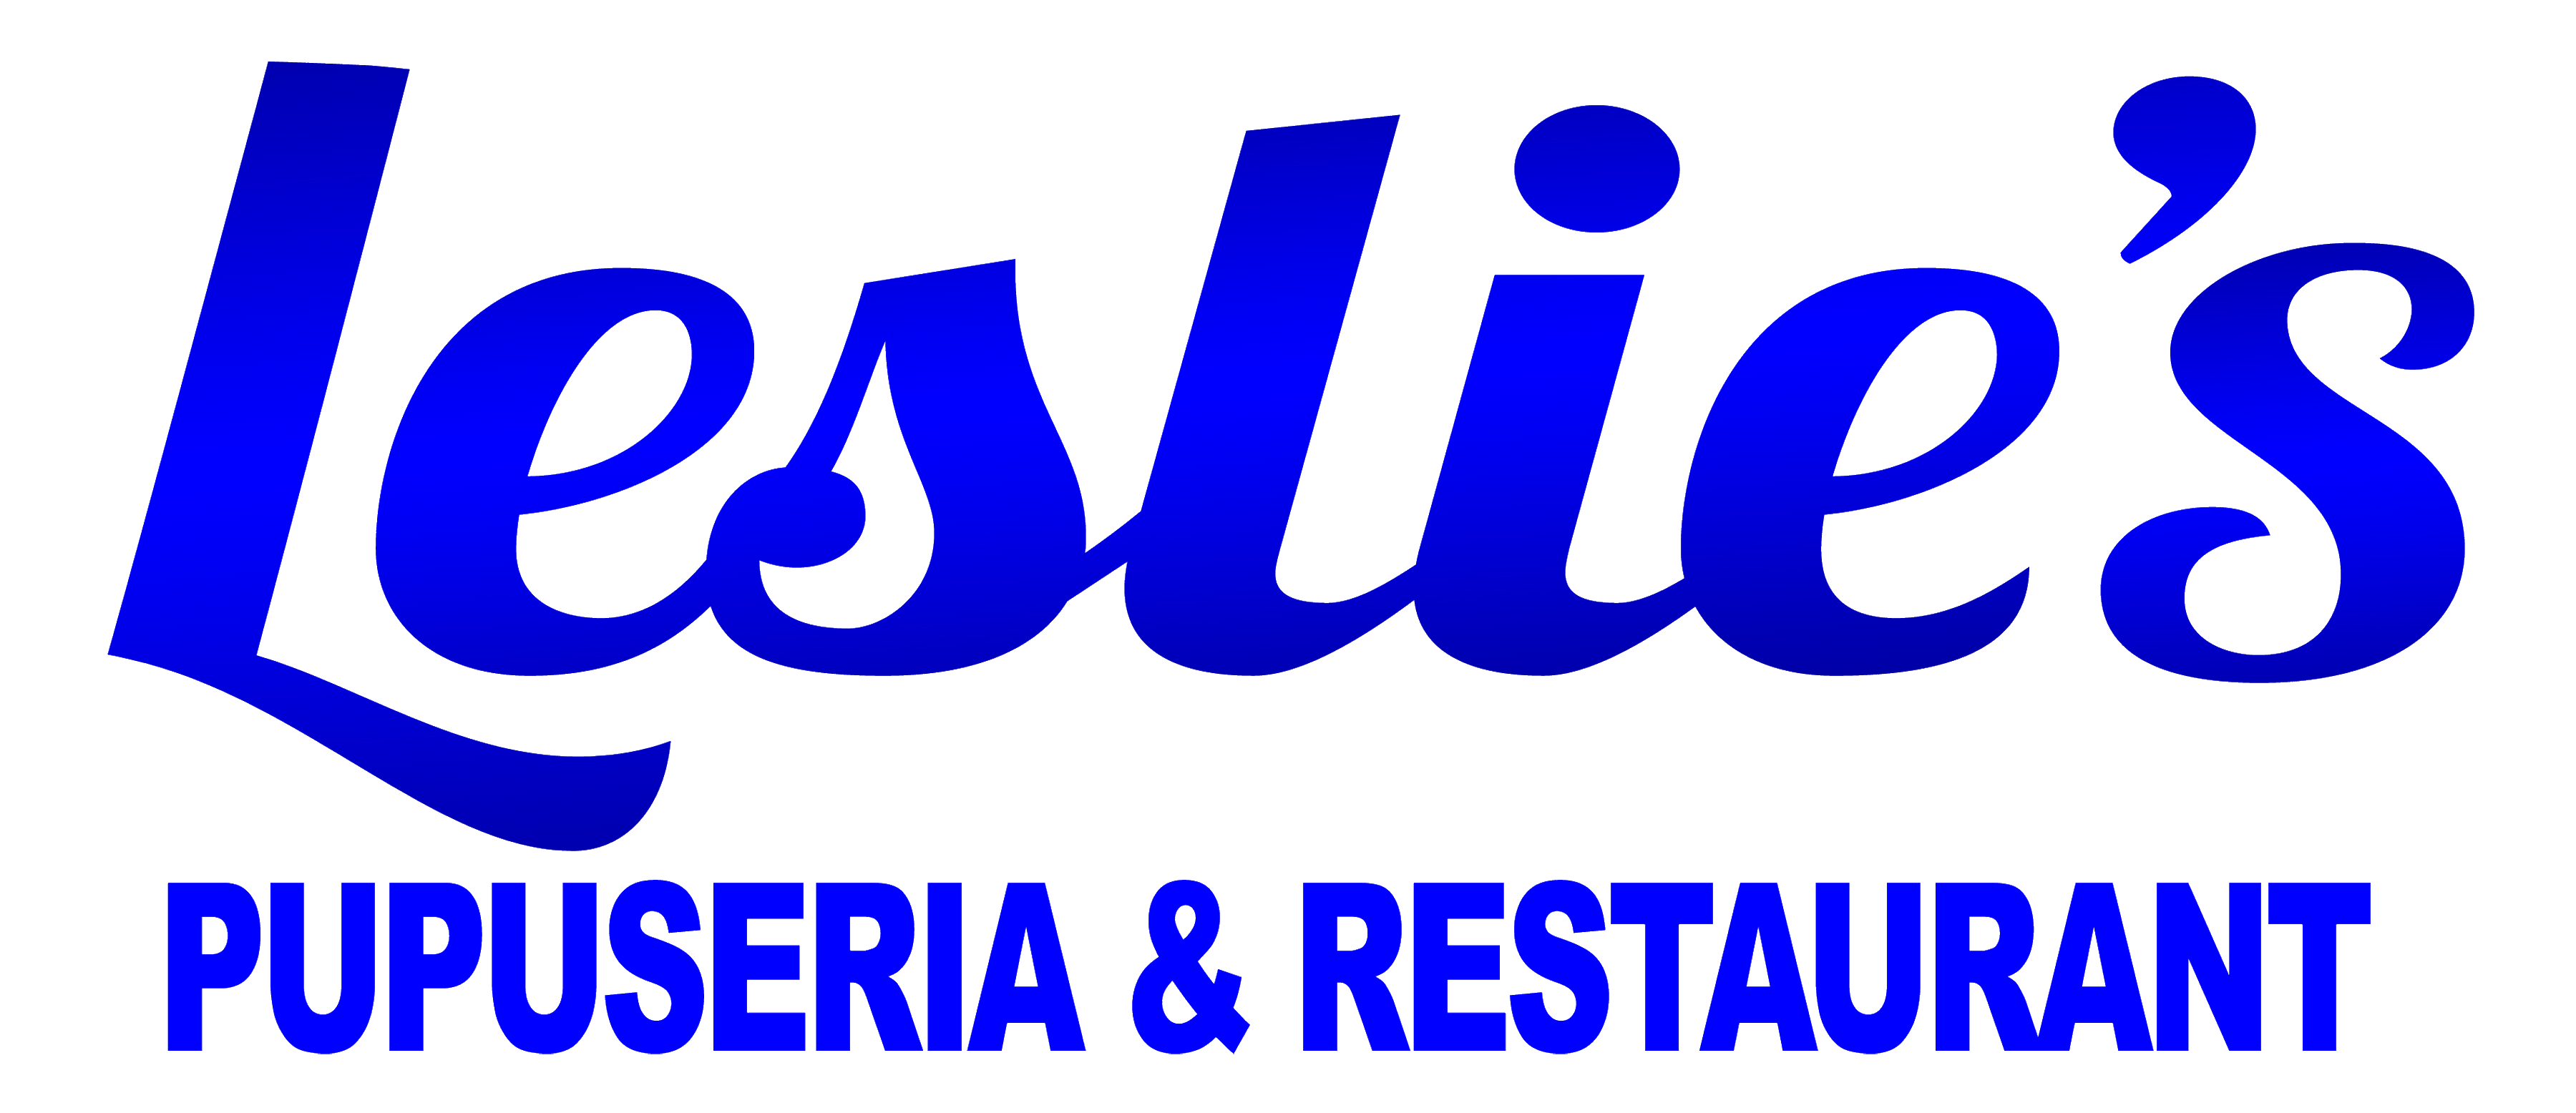 Leslie's Pupuseria and Resturant